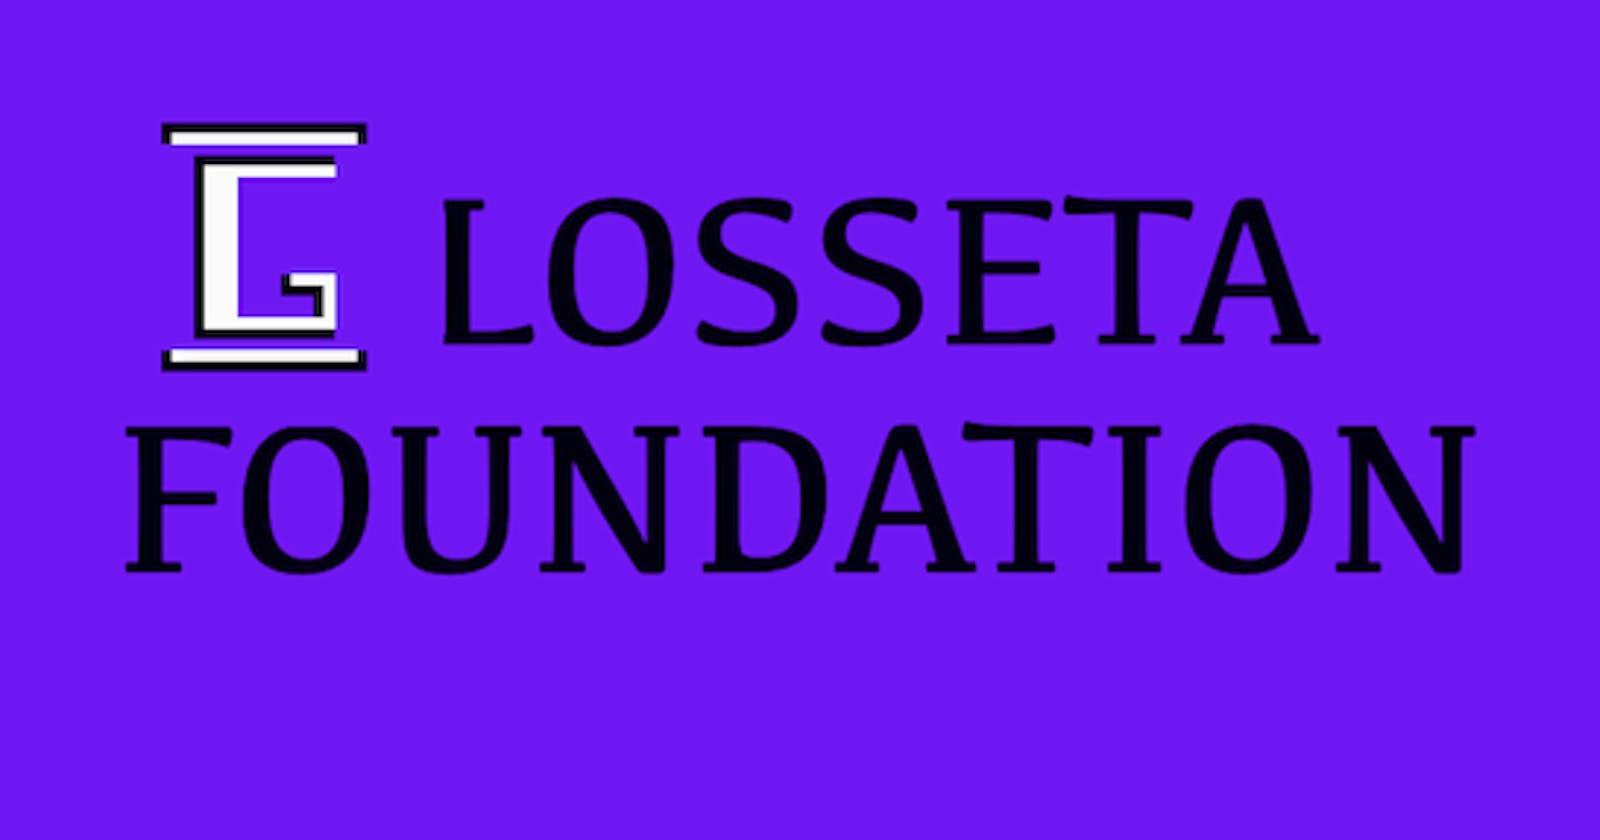 Introducing The Glosseta Foundation